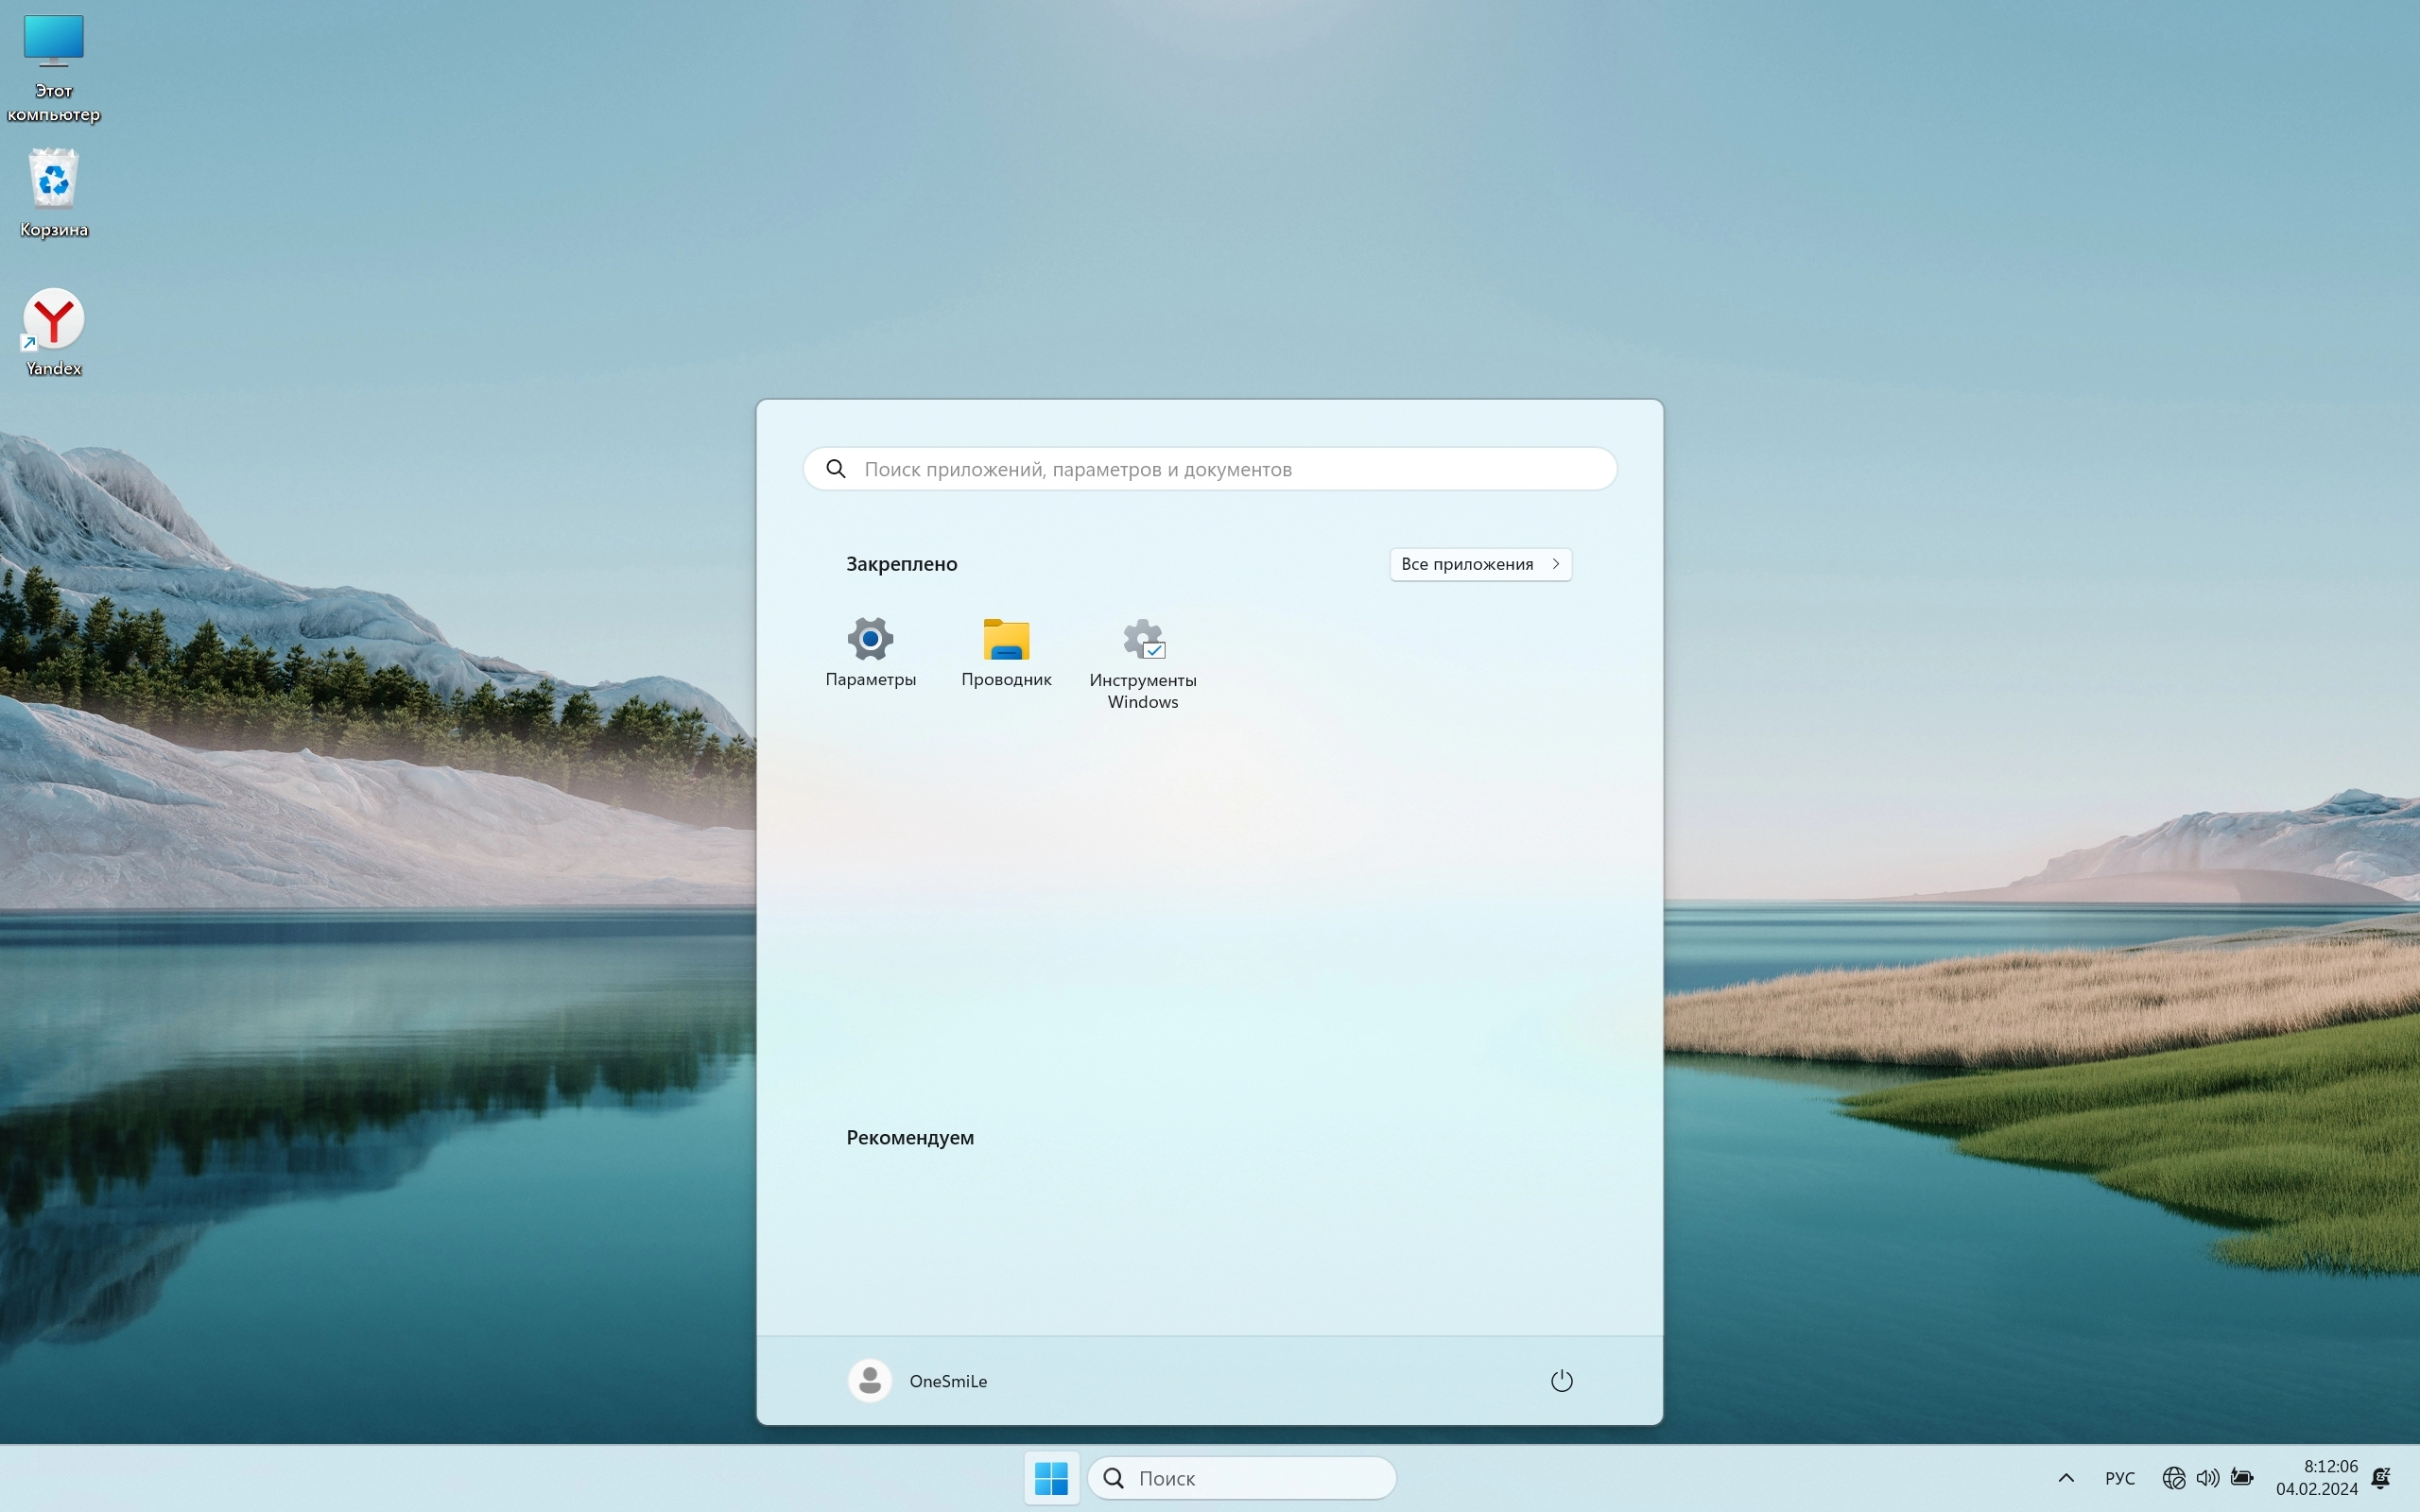 Windows 11 23H2 x64 Русская by OneSmiLe [22635.3139]